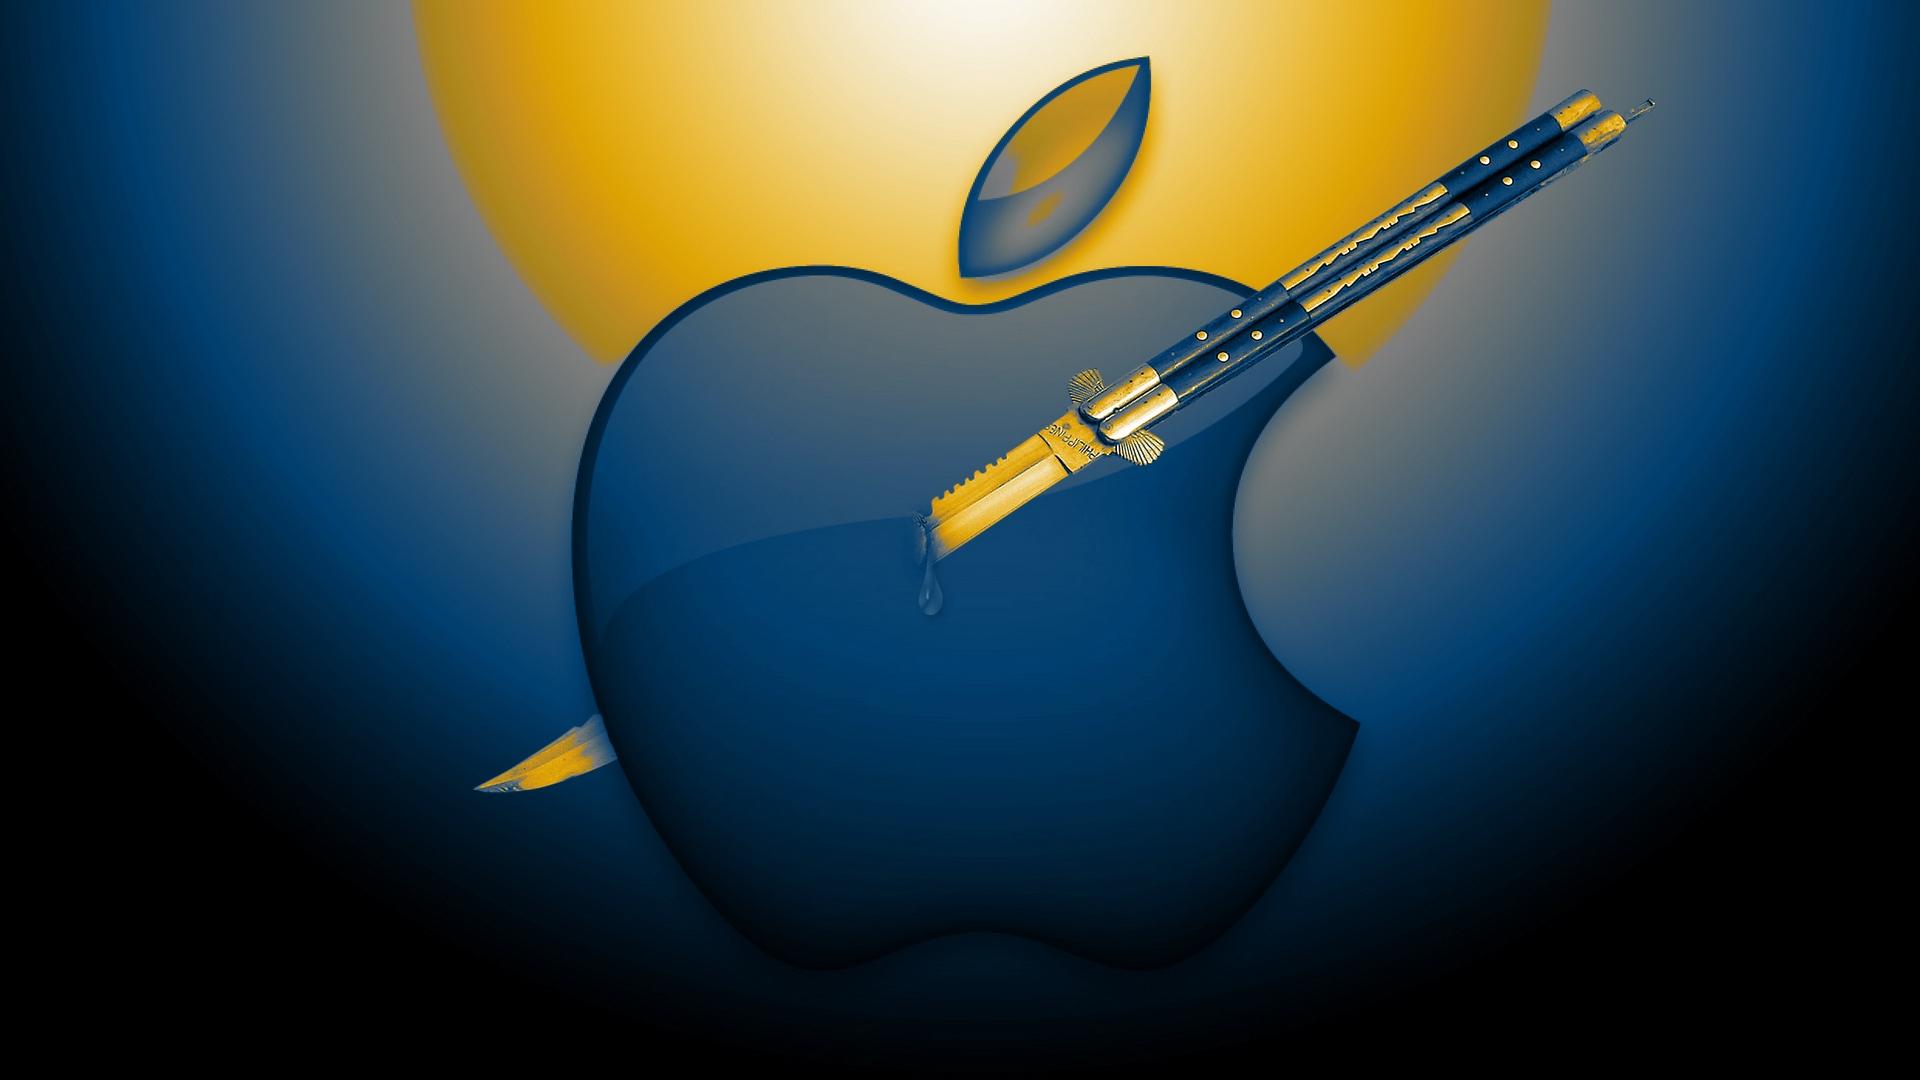 Creative Apple Mac Logo Art Wallpaper